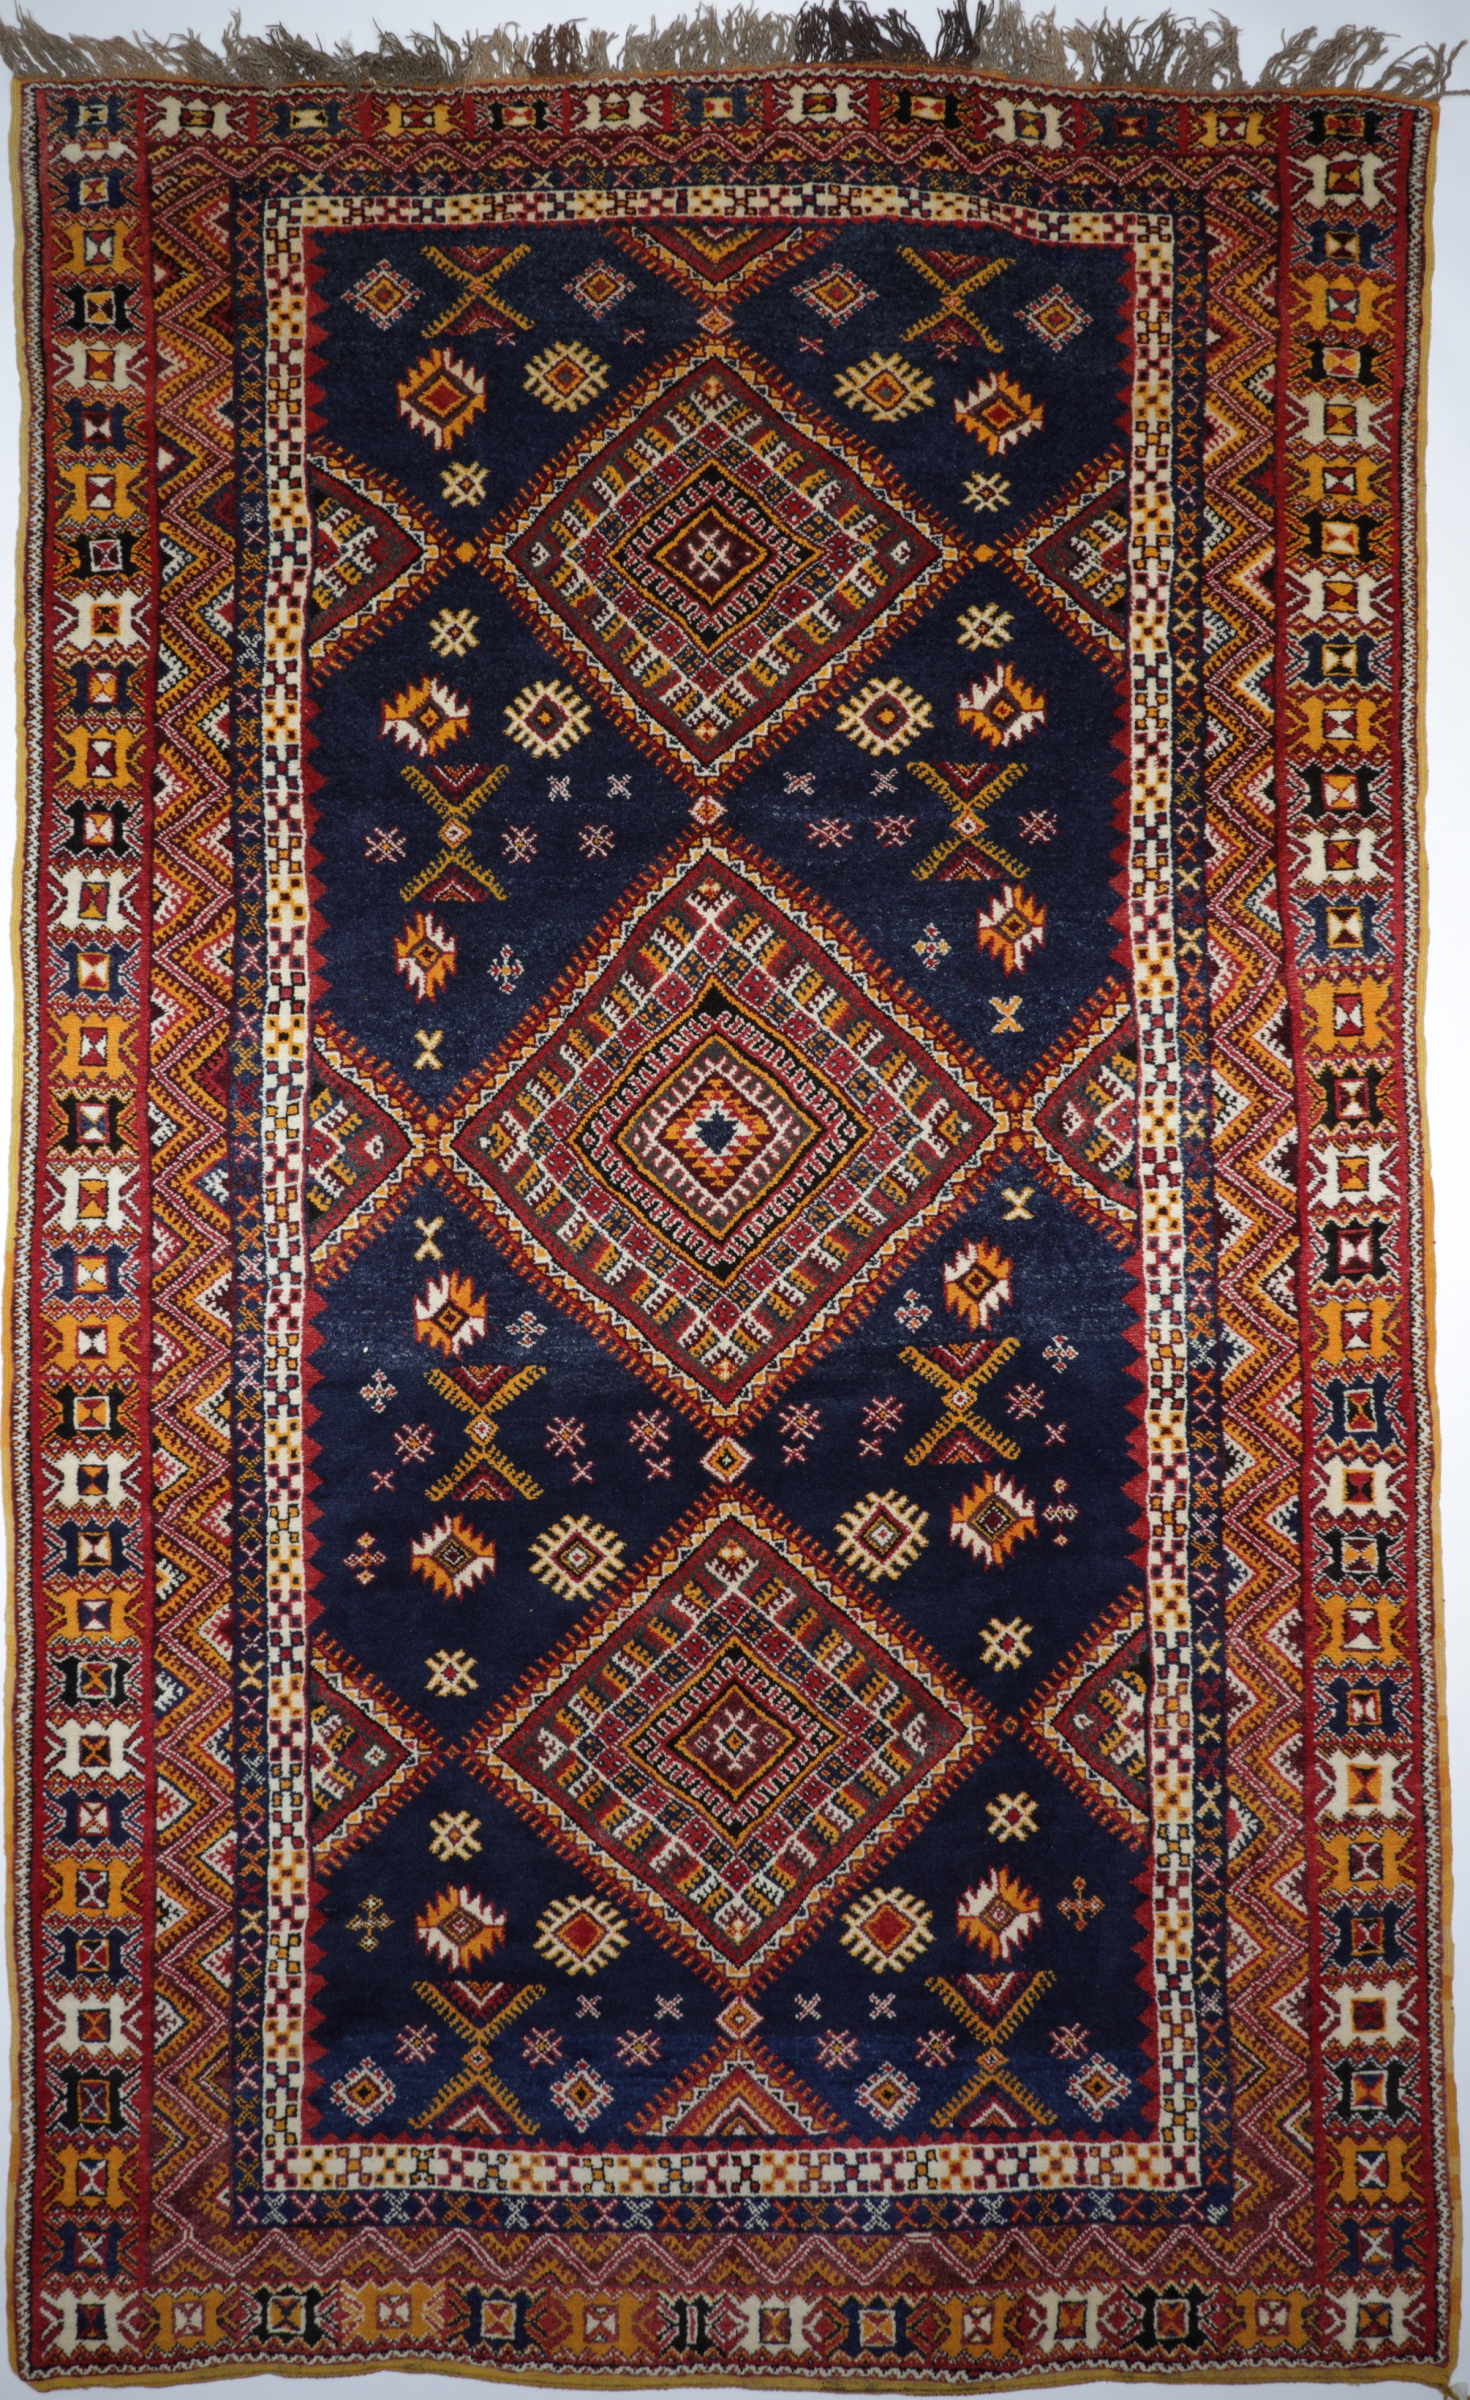 Original marokkanischer Ouzguit Berberteppich aus den 60/70er Jahren, mehrfarbig, Draufsicht